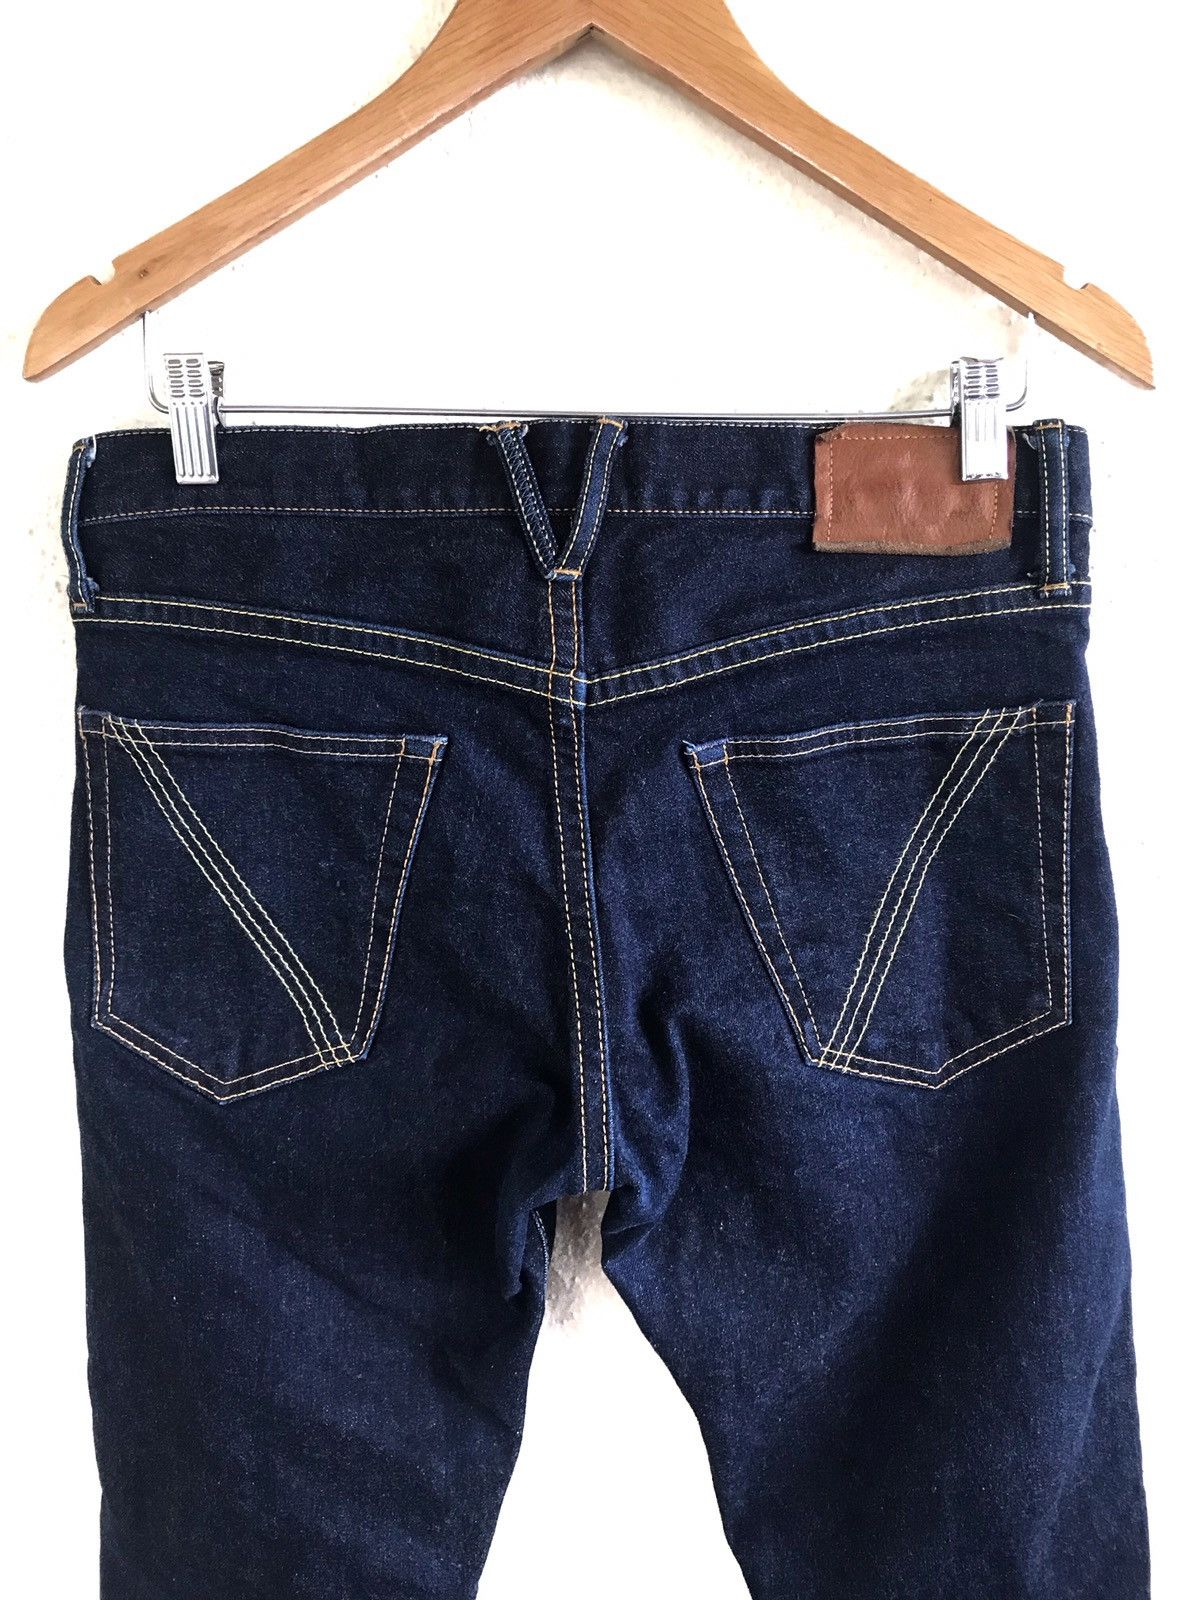 VANQUISH Japan Selvedge Skinny Jeans - 7